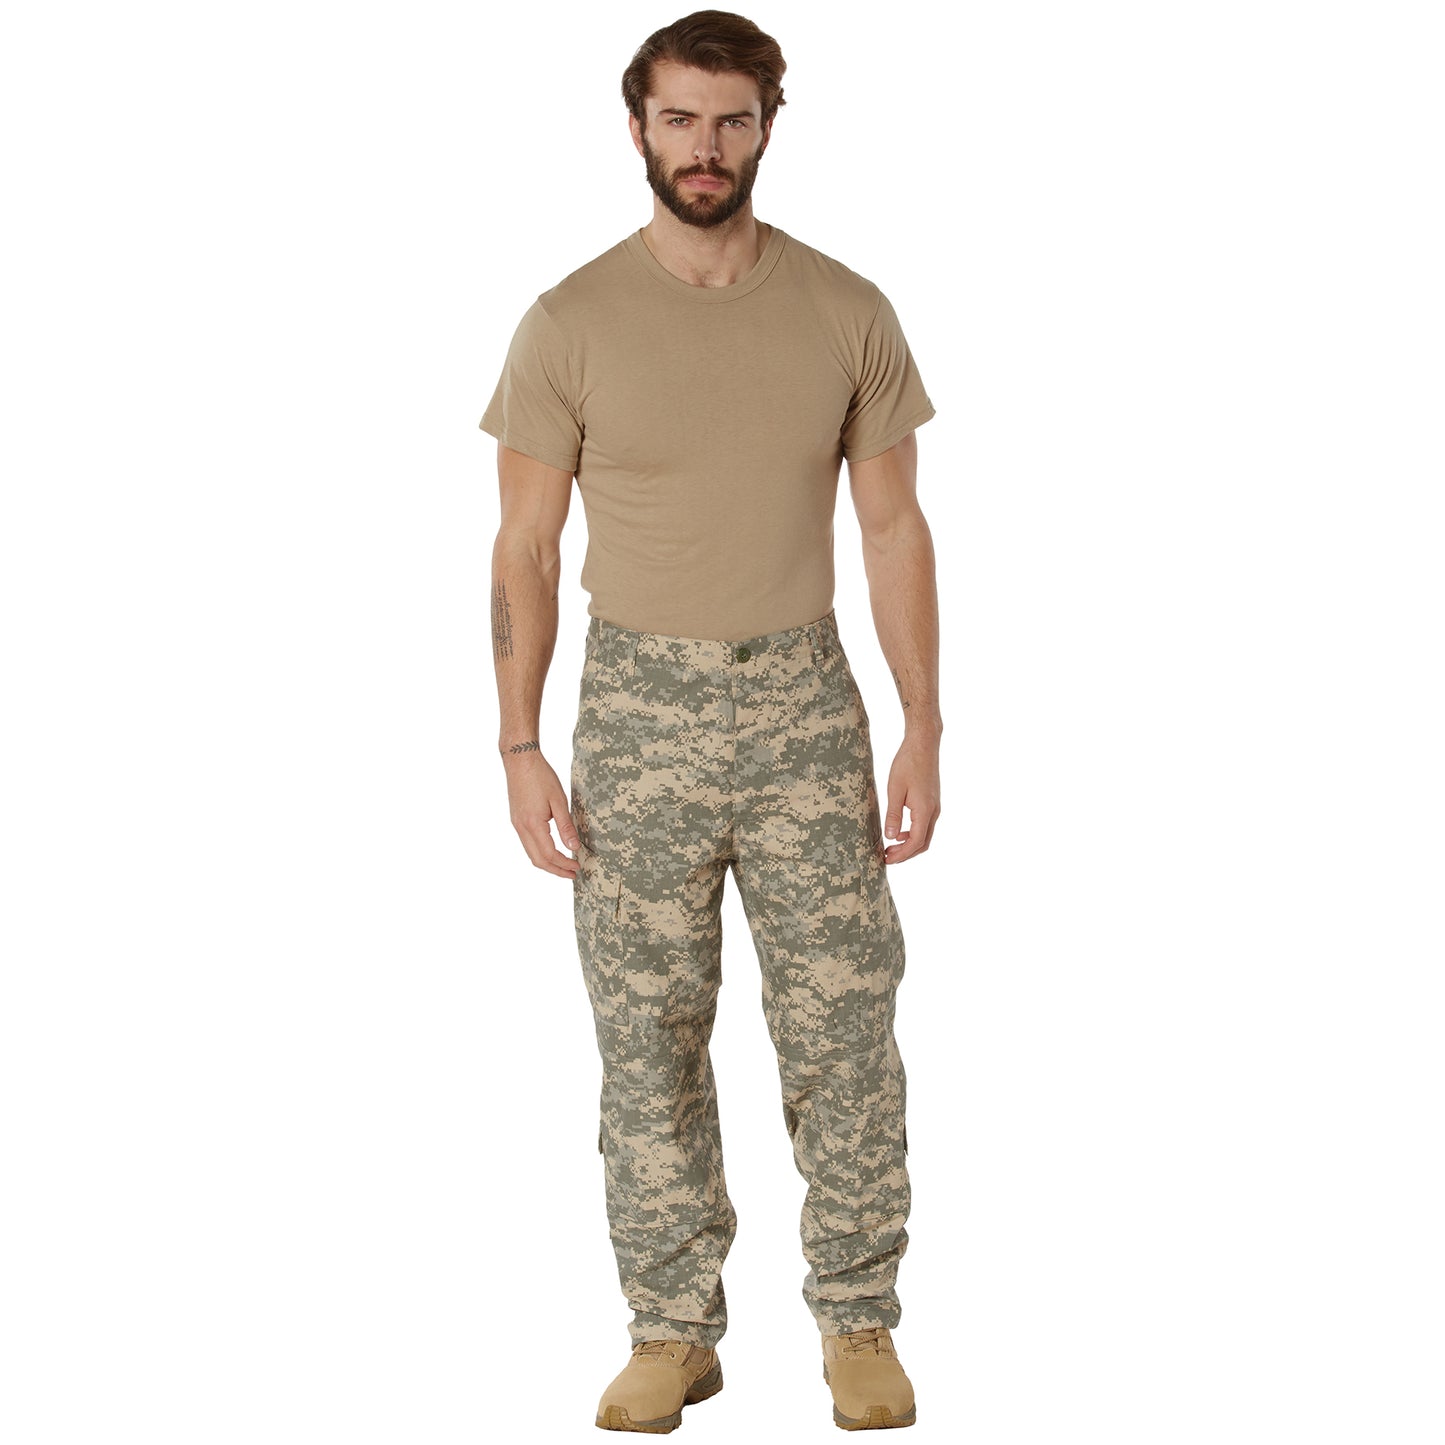 Rothco Camo Army Combat Uniform Pants - ACU Digital Camo